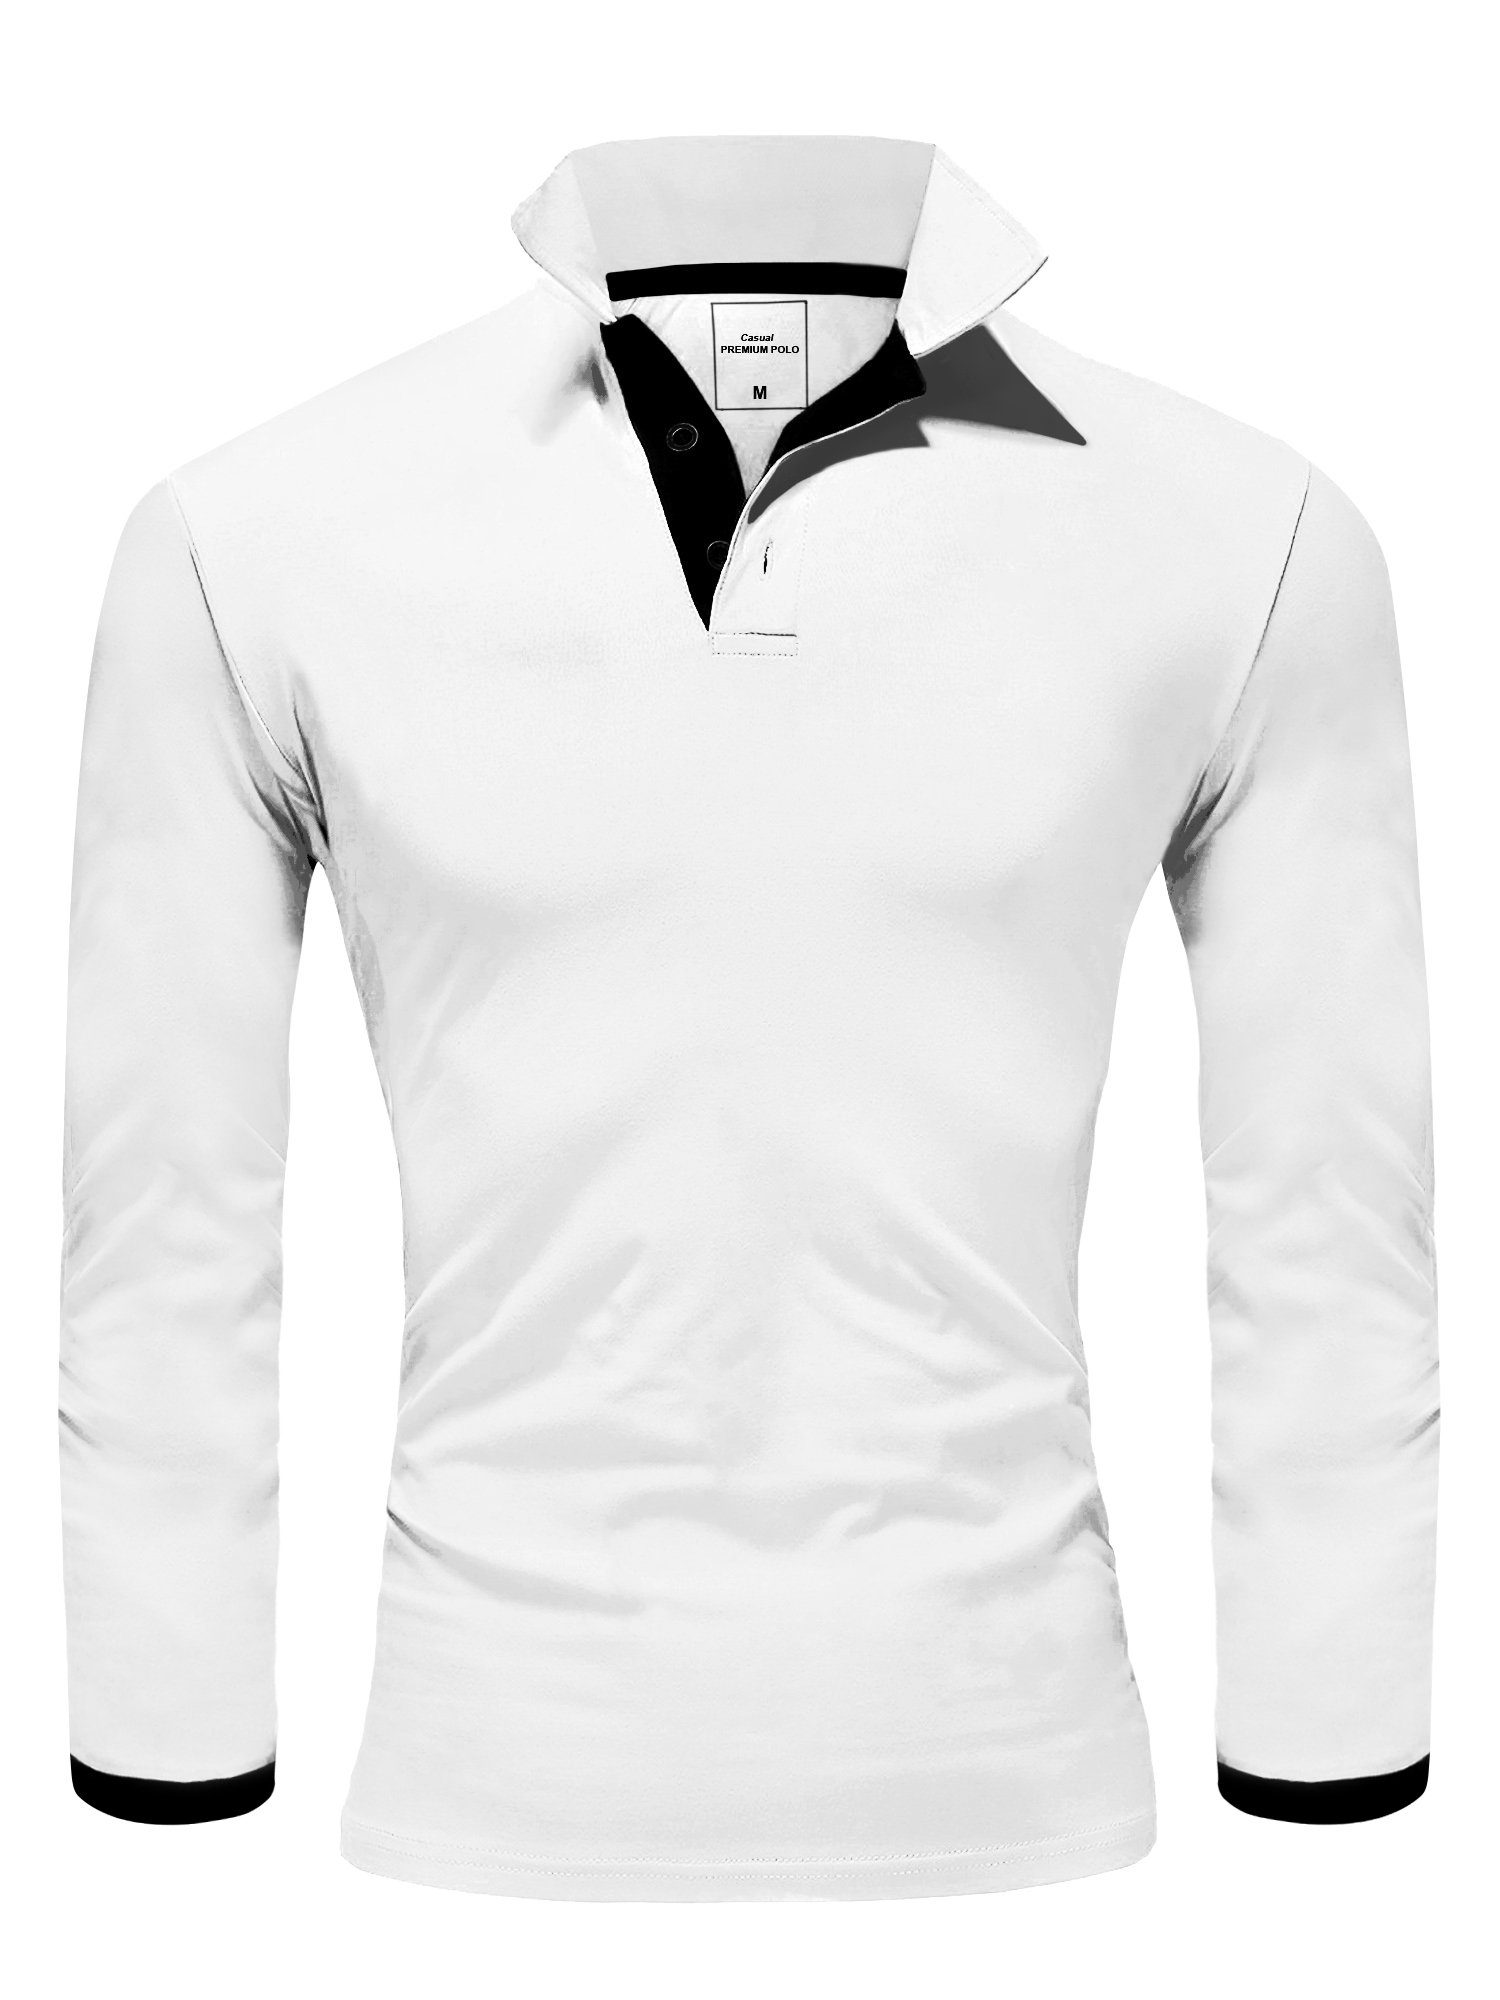 Amaci&Sons Poloshirt CHARLOTTE Langarm Kontrast Poloshirt Weiß/Schwarz